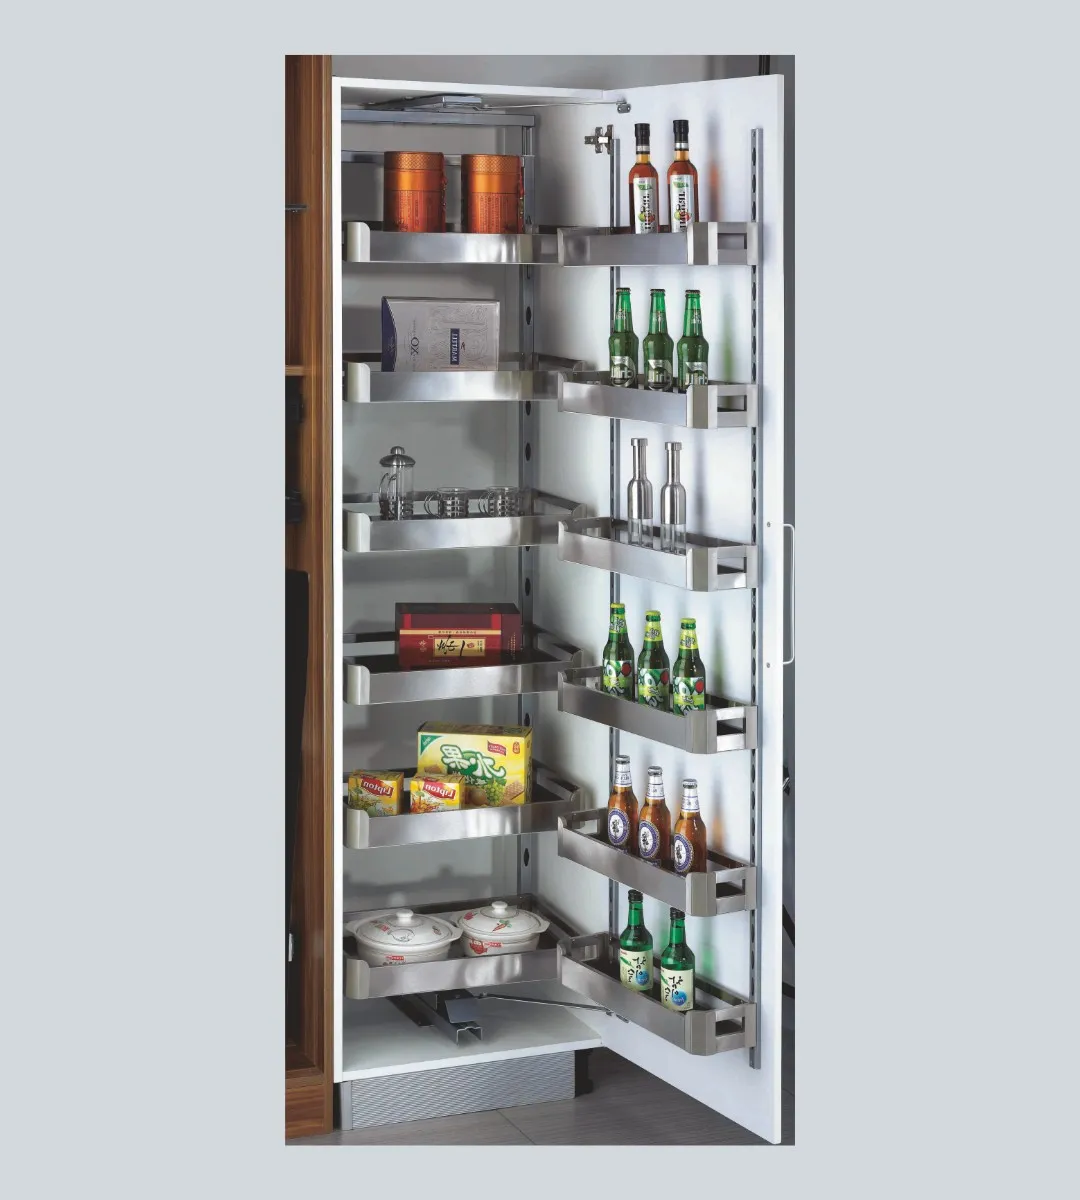 HYZIK Kitchen Organiser Stainless Steel Pantry Units